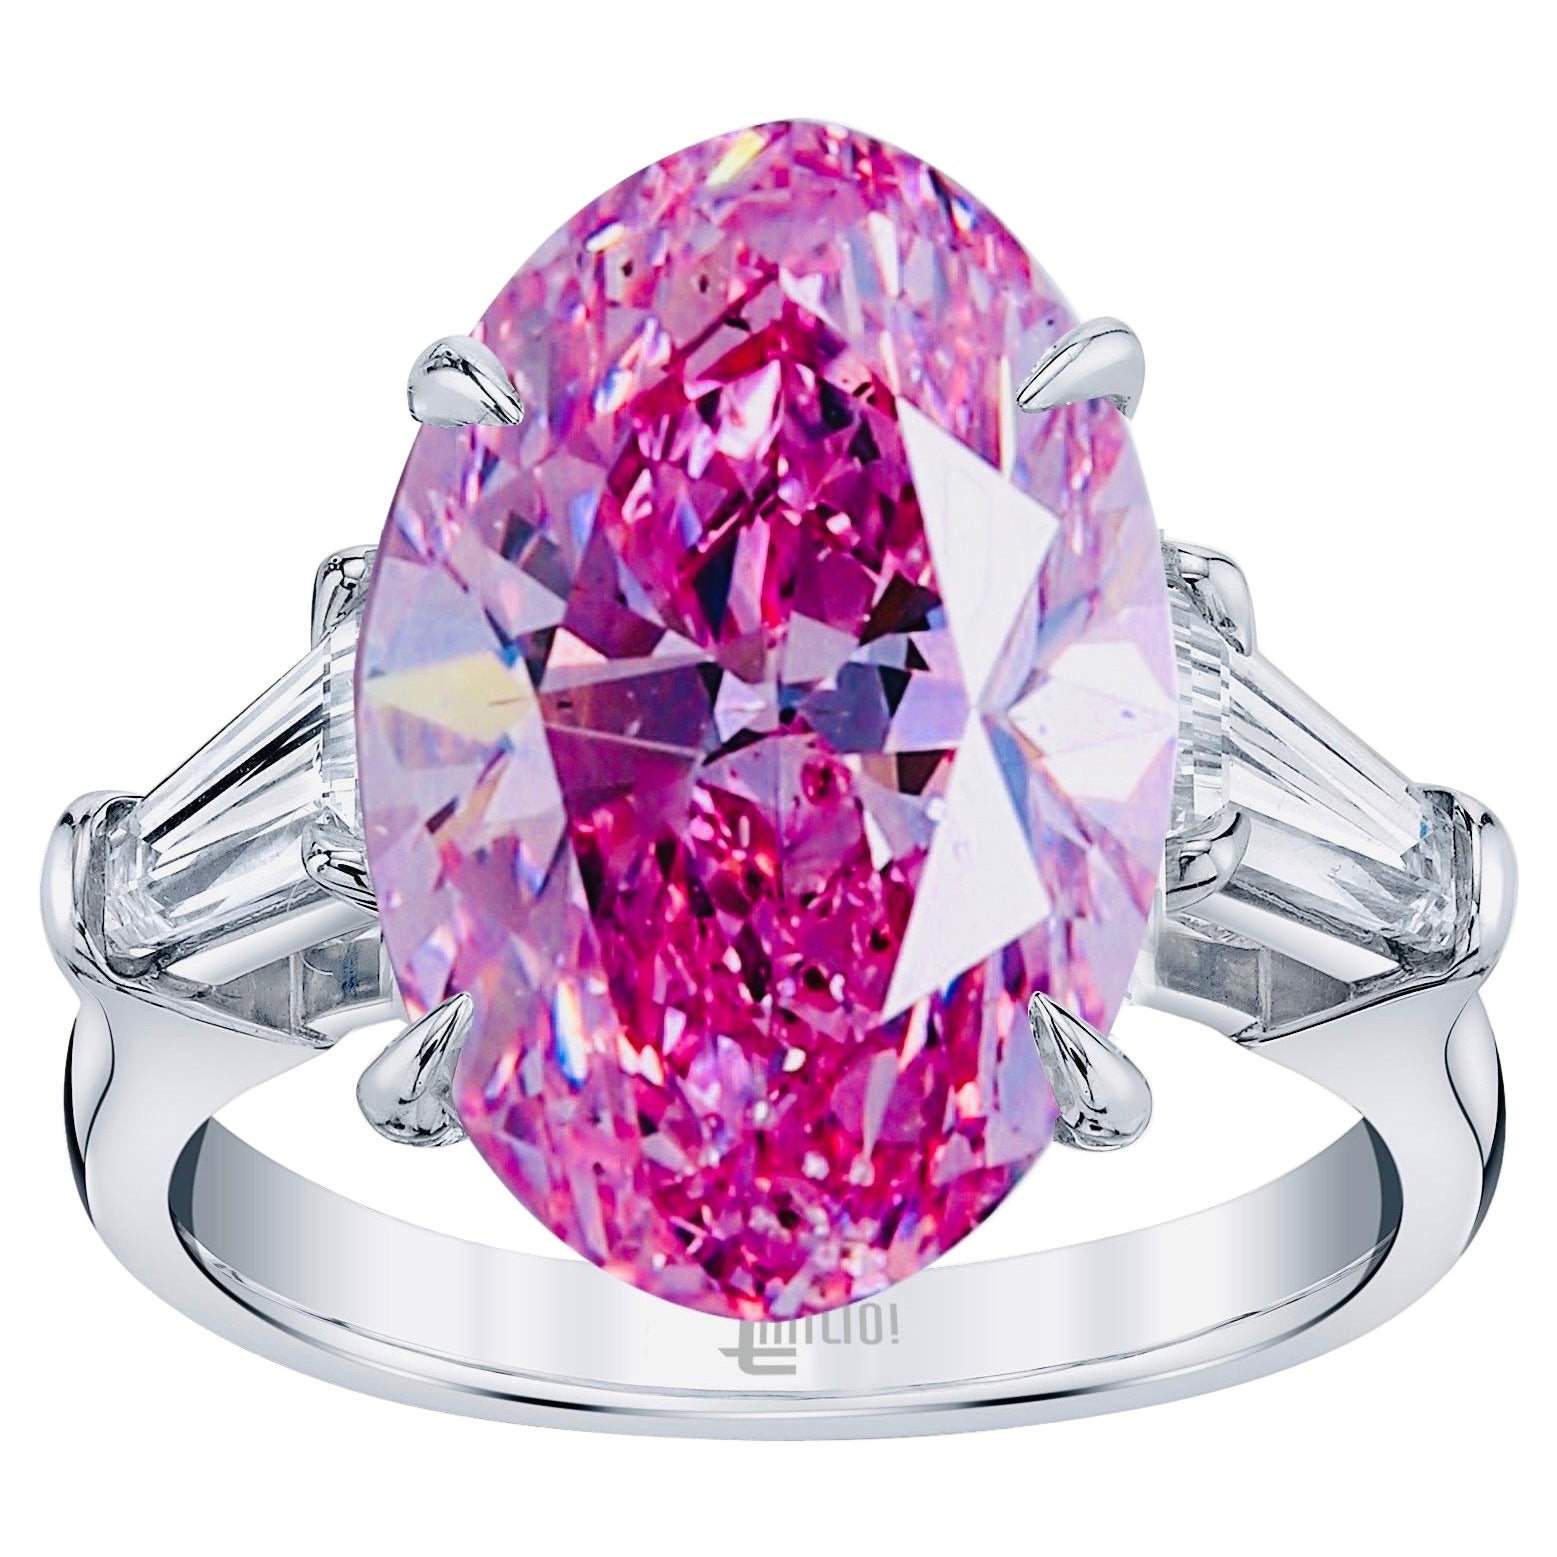 Emilio Jewelry Gia Certified 2.00 Carat Vivid Pink Diamond Ring For Sale